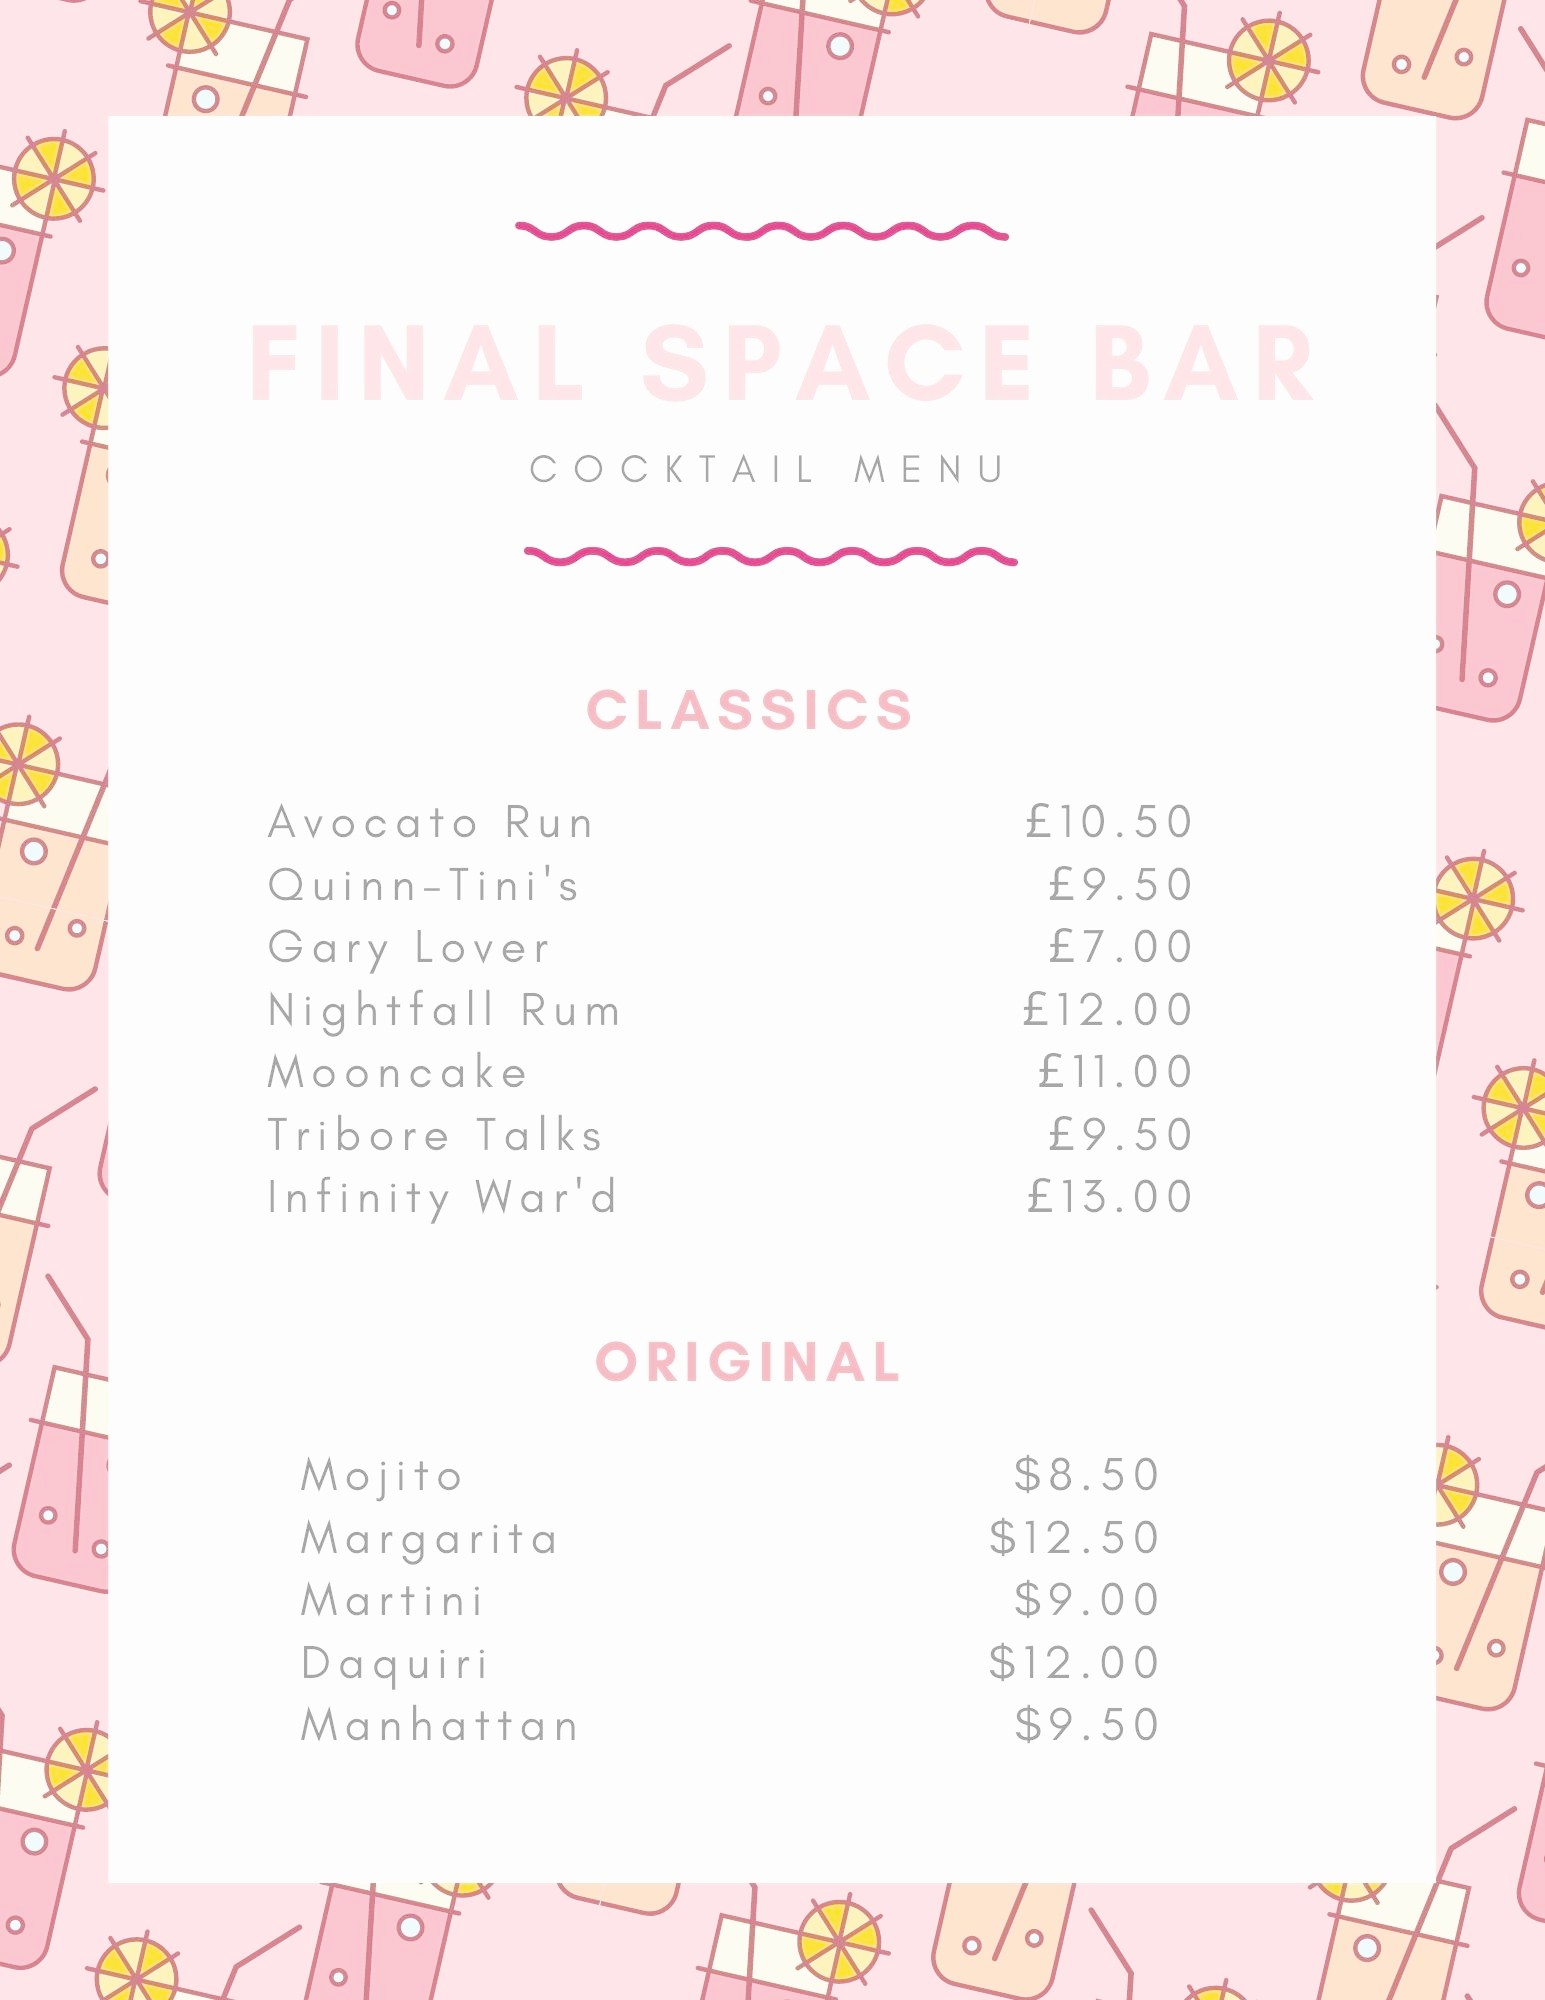 <img src="Final Space.jpg" alt="Final Space cocktail bar menu"/> 